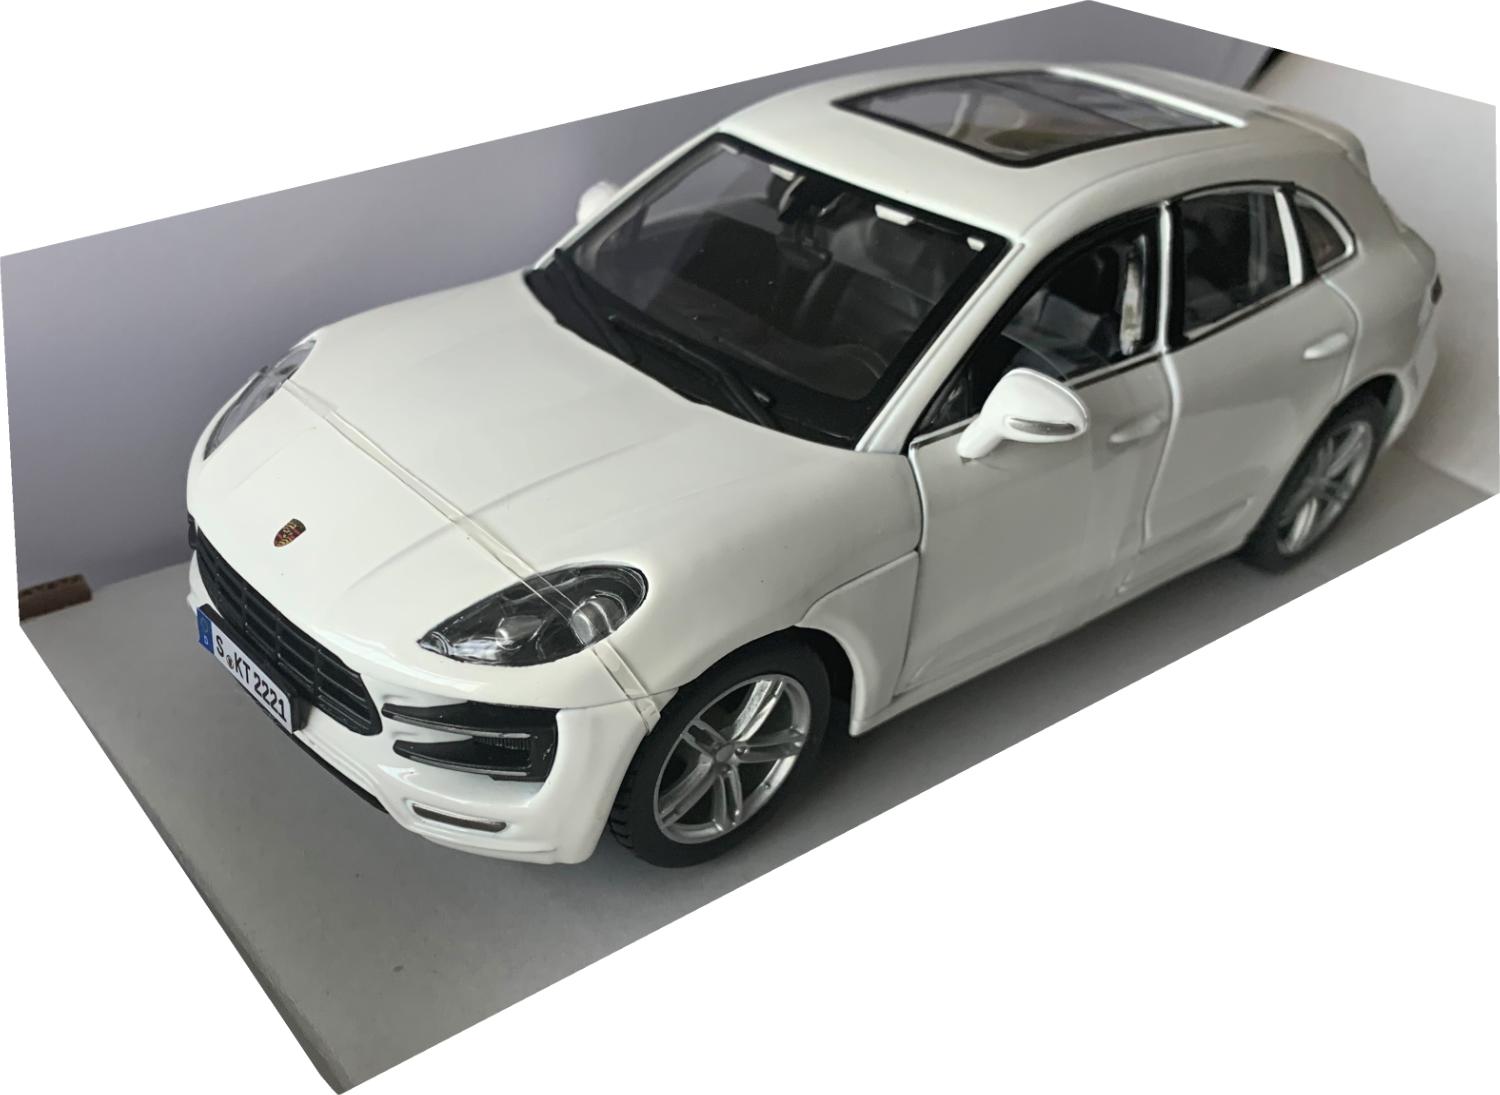 Porsche Macan in white 1:24 scale model from Bburago